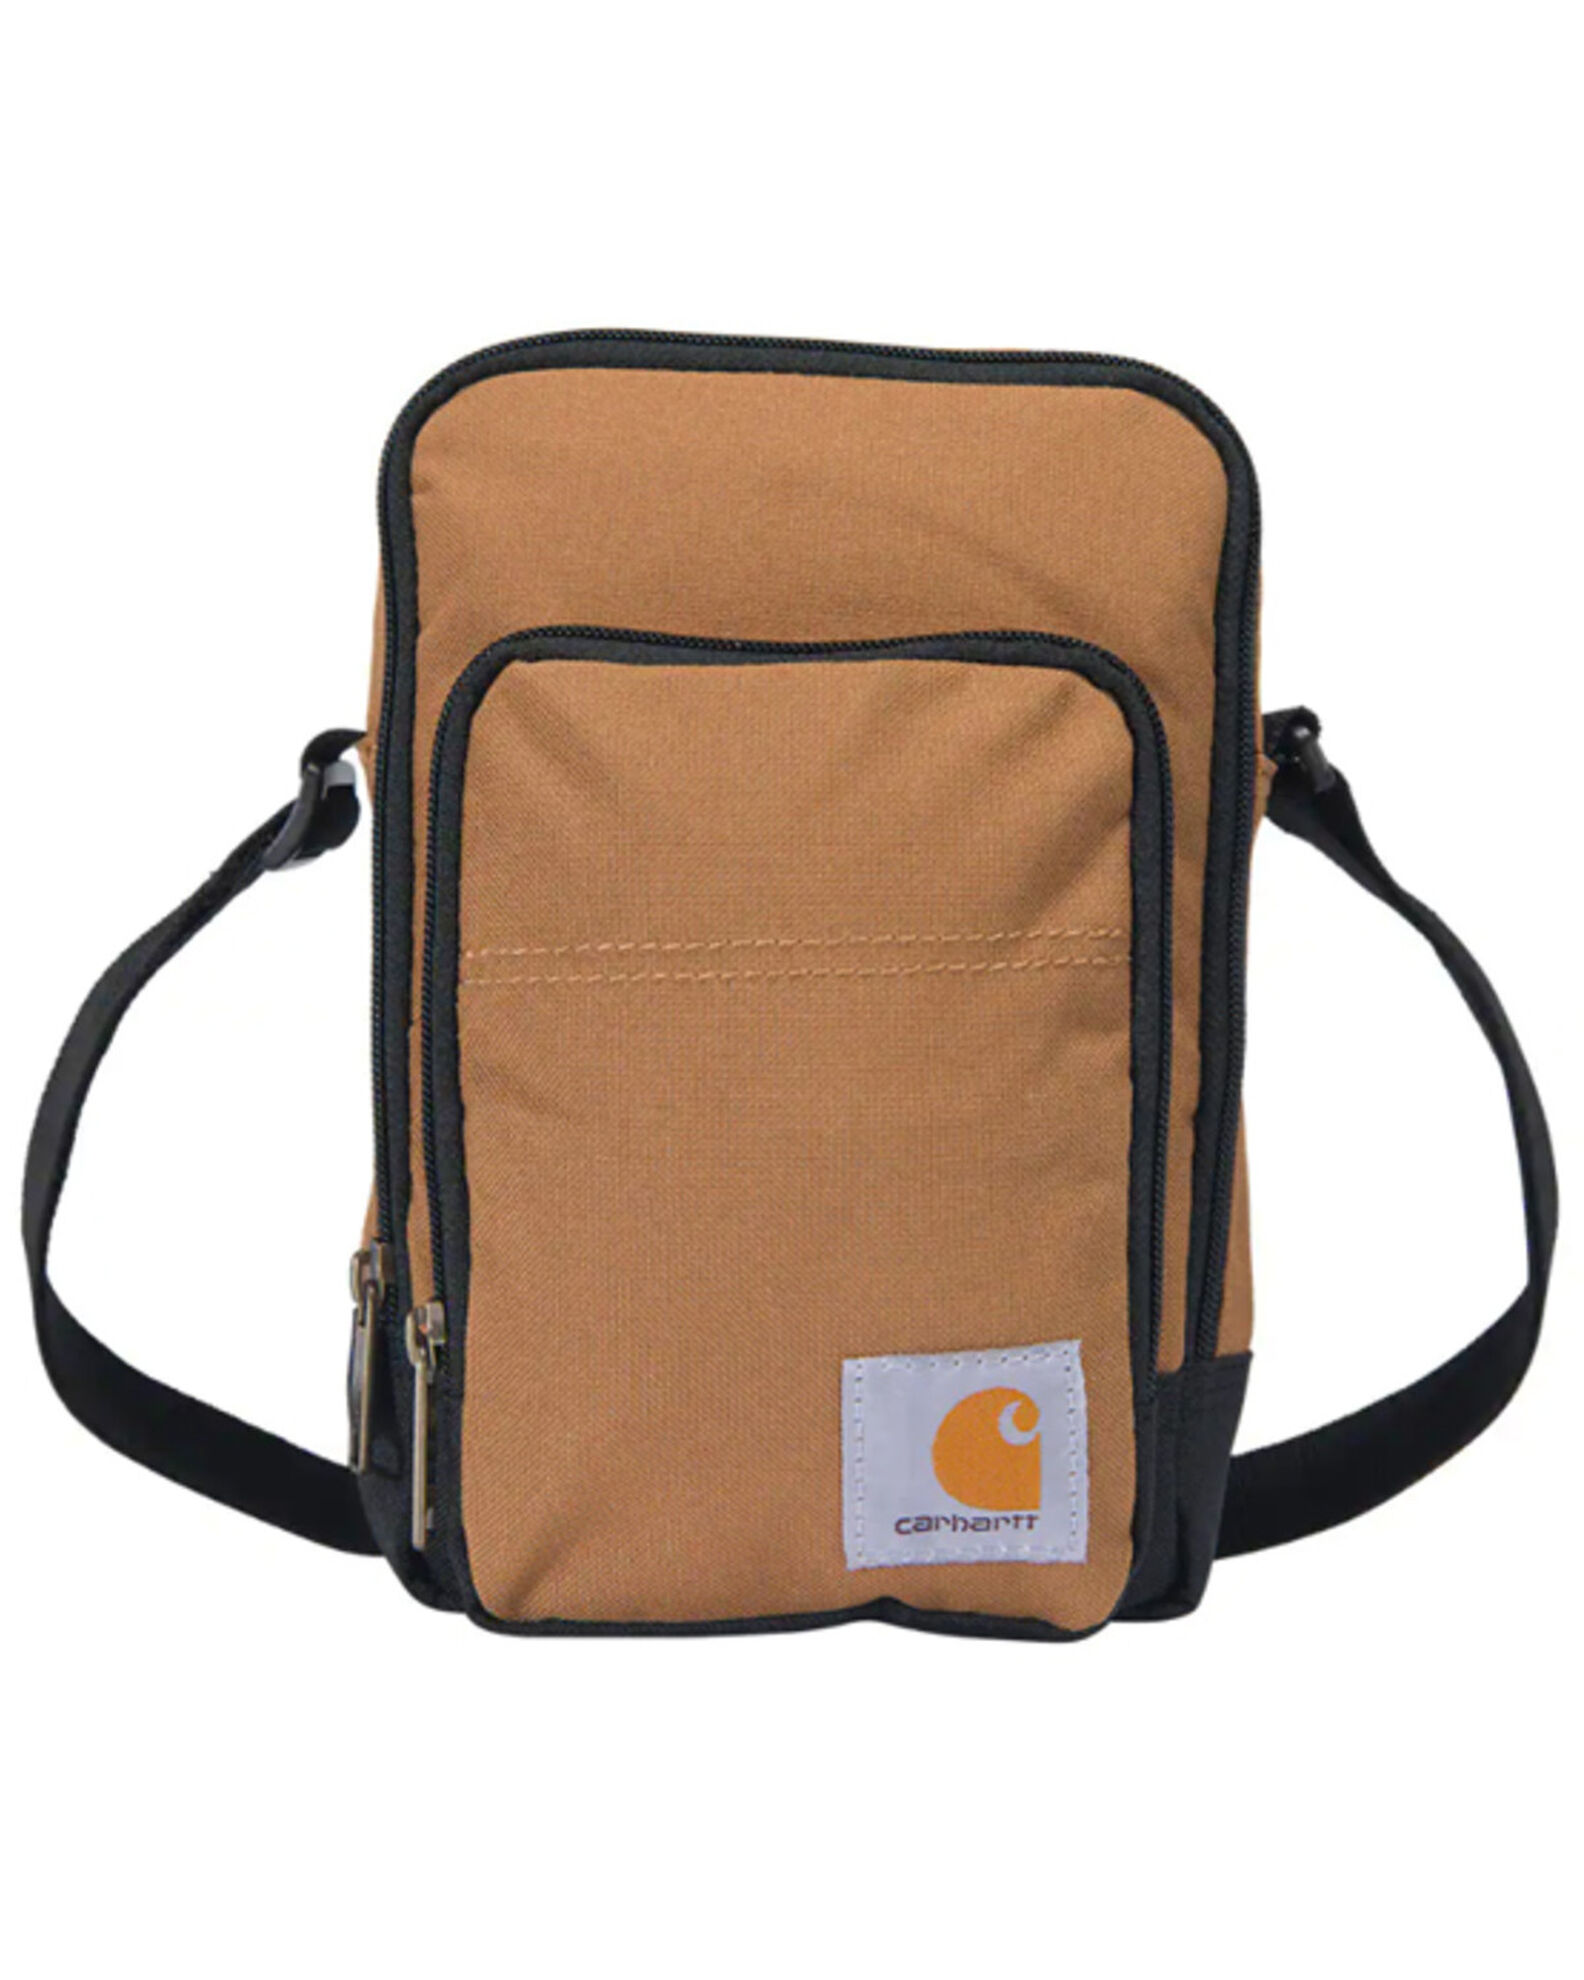 Product Name: Carhartt Crossbody Zip Bag